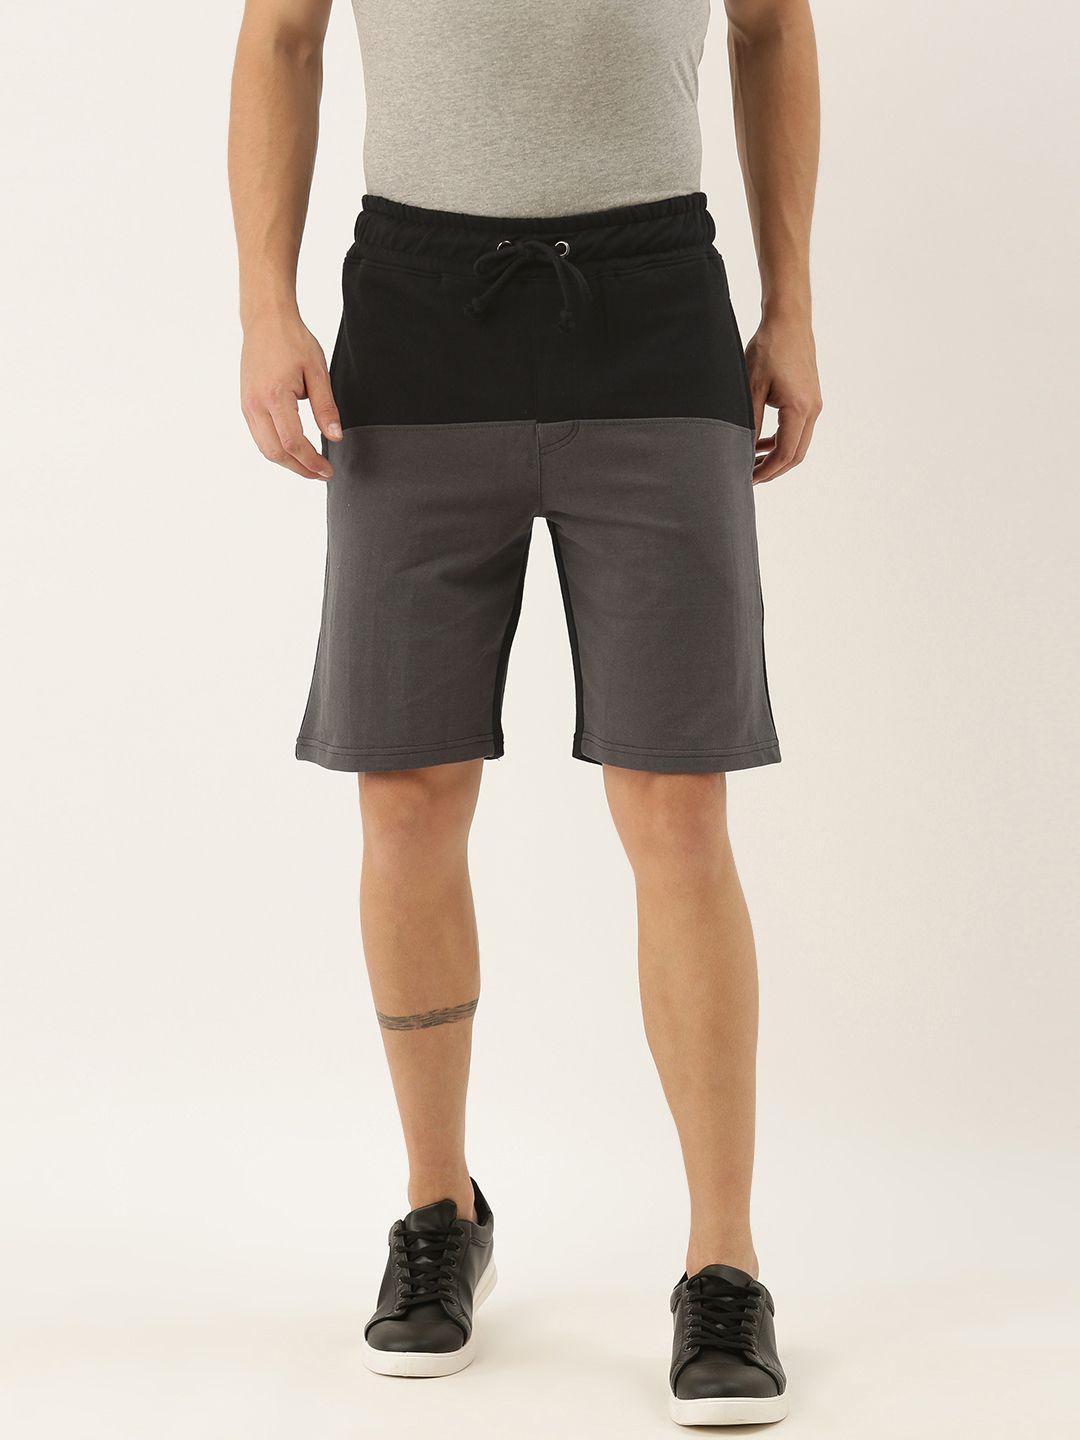 arise-men-black-&-grey-colourblocked-regular-fit-pure-cotton-shorts